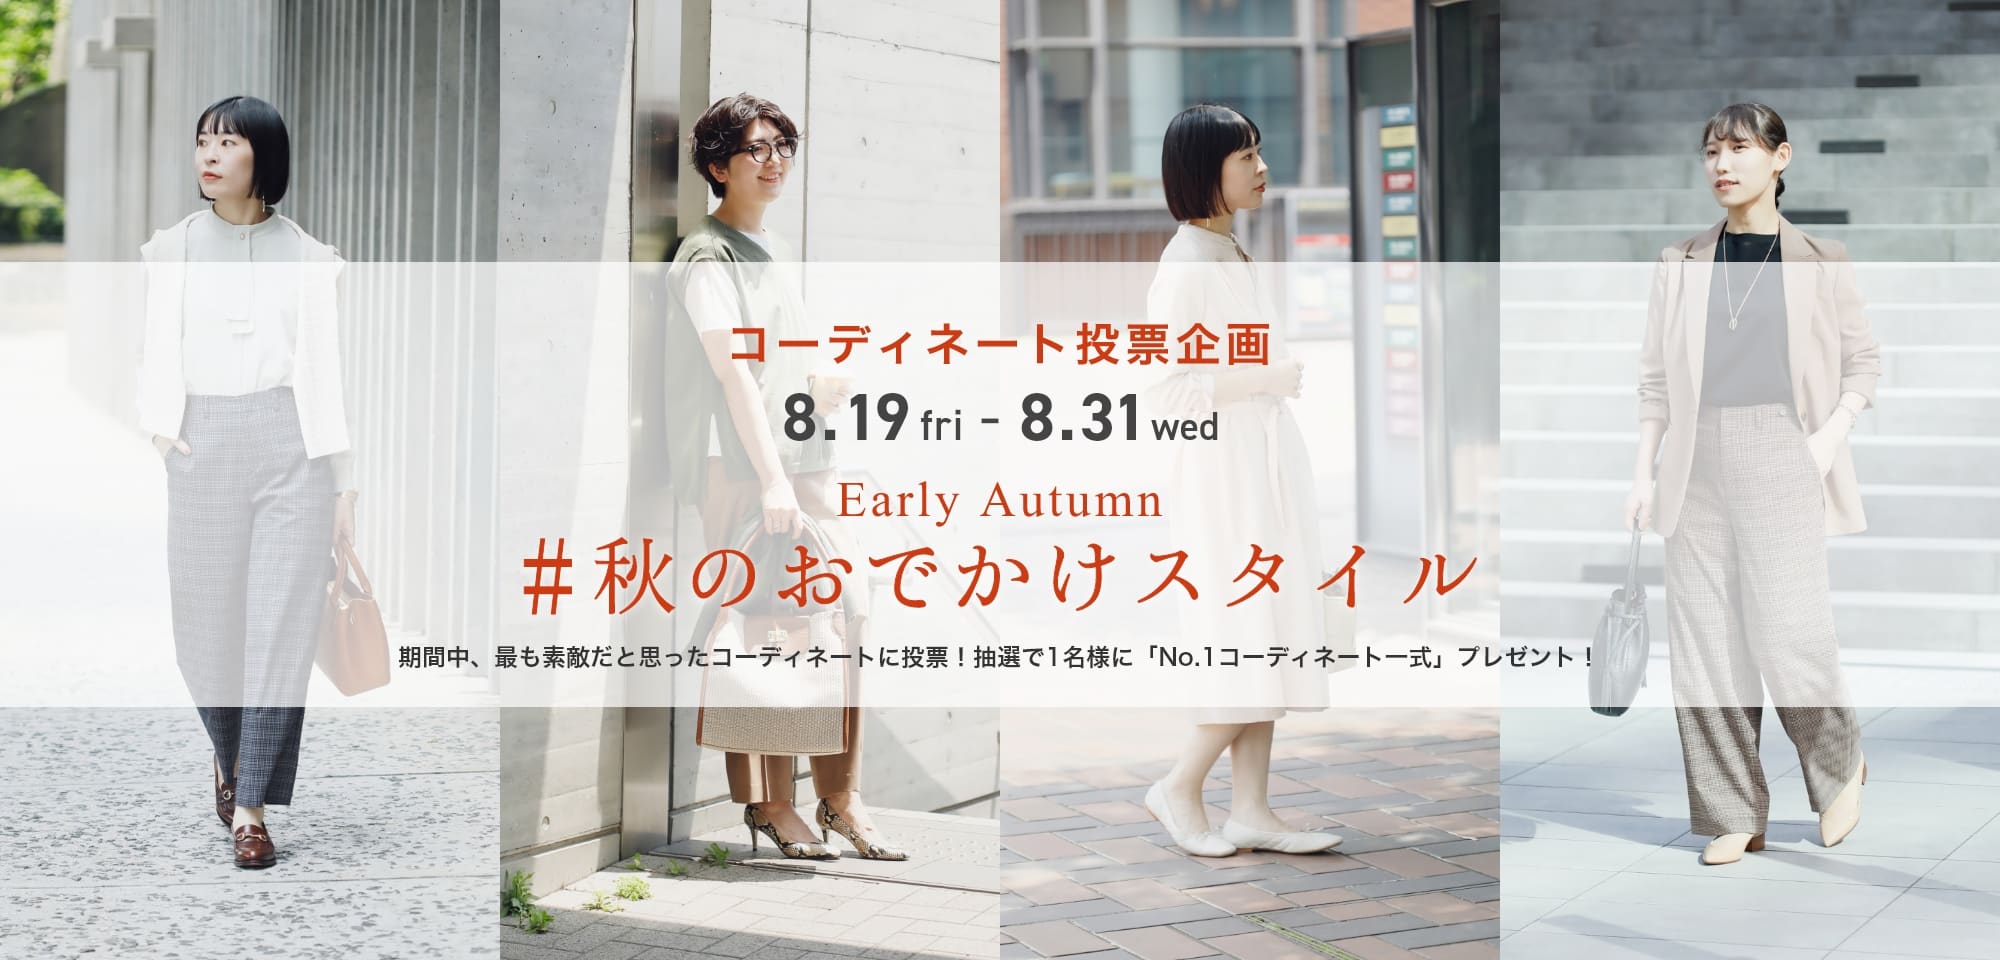 Early Autumn #秋のおでかけスタイル